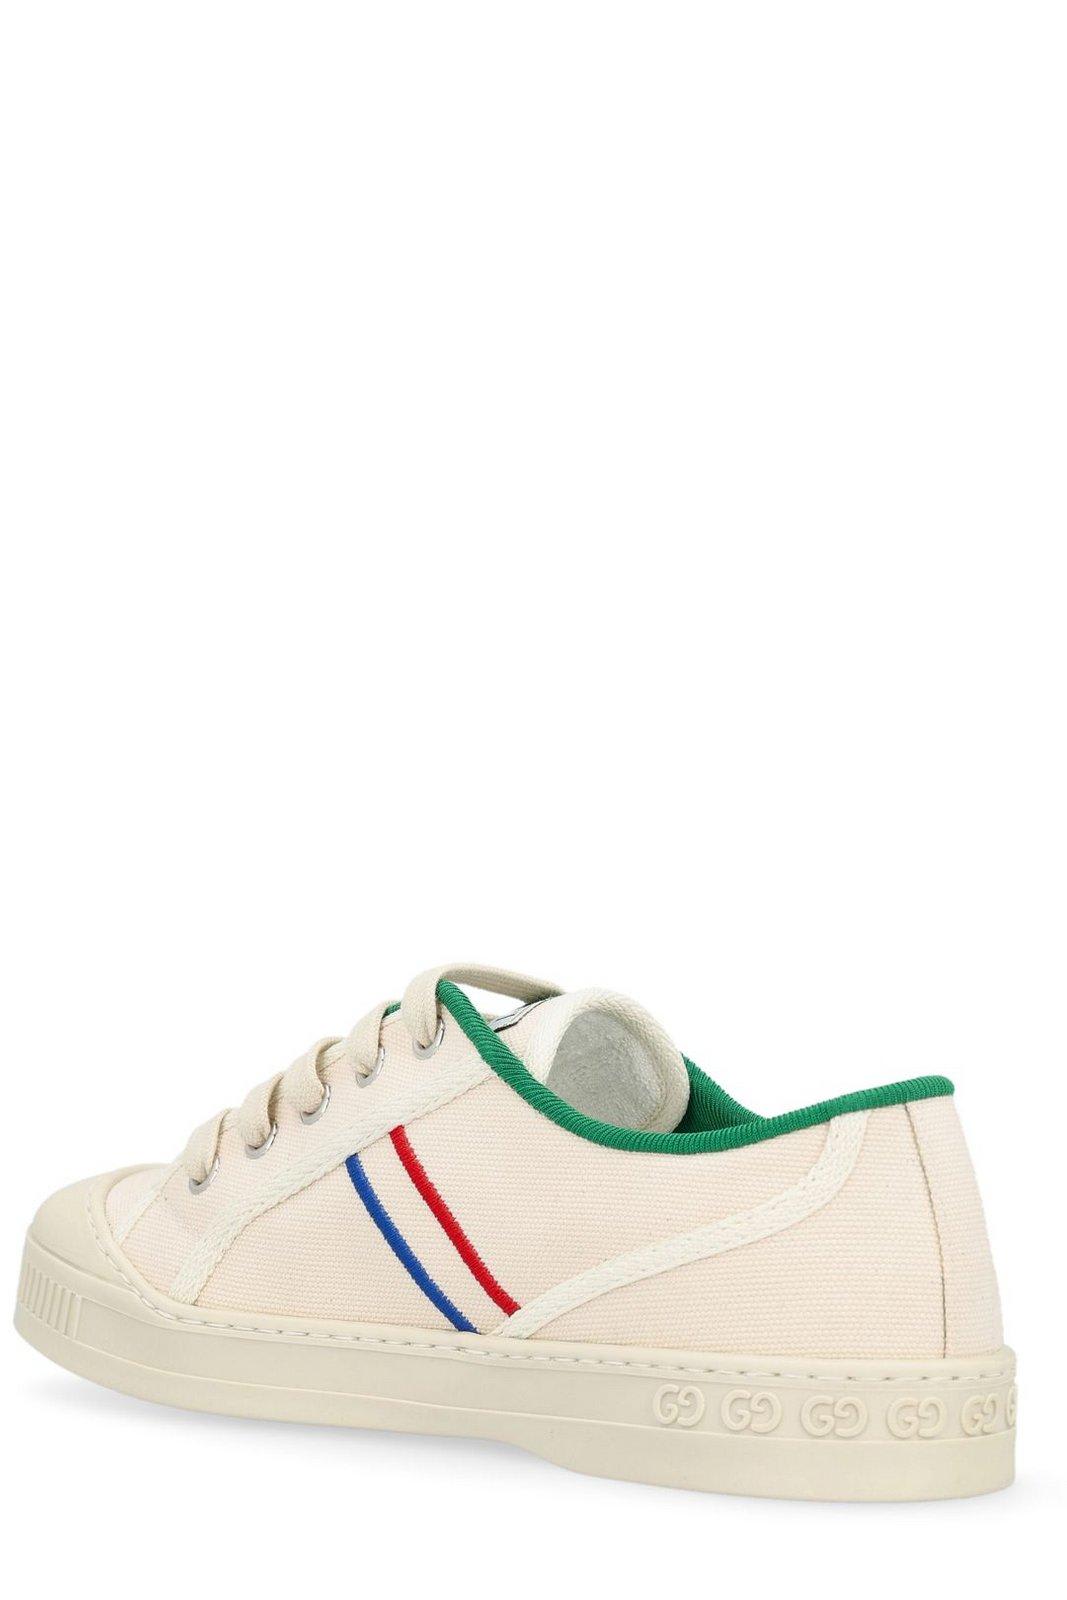 Shop Gucci Tennis 1977 Lace-up Sneakers In Greggio White